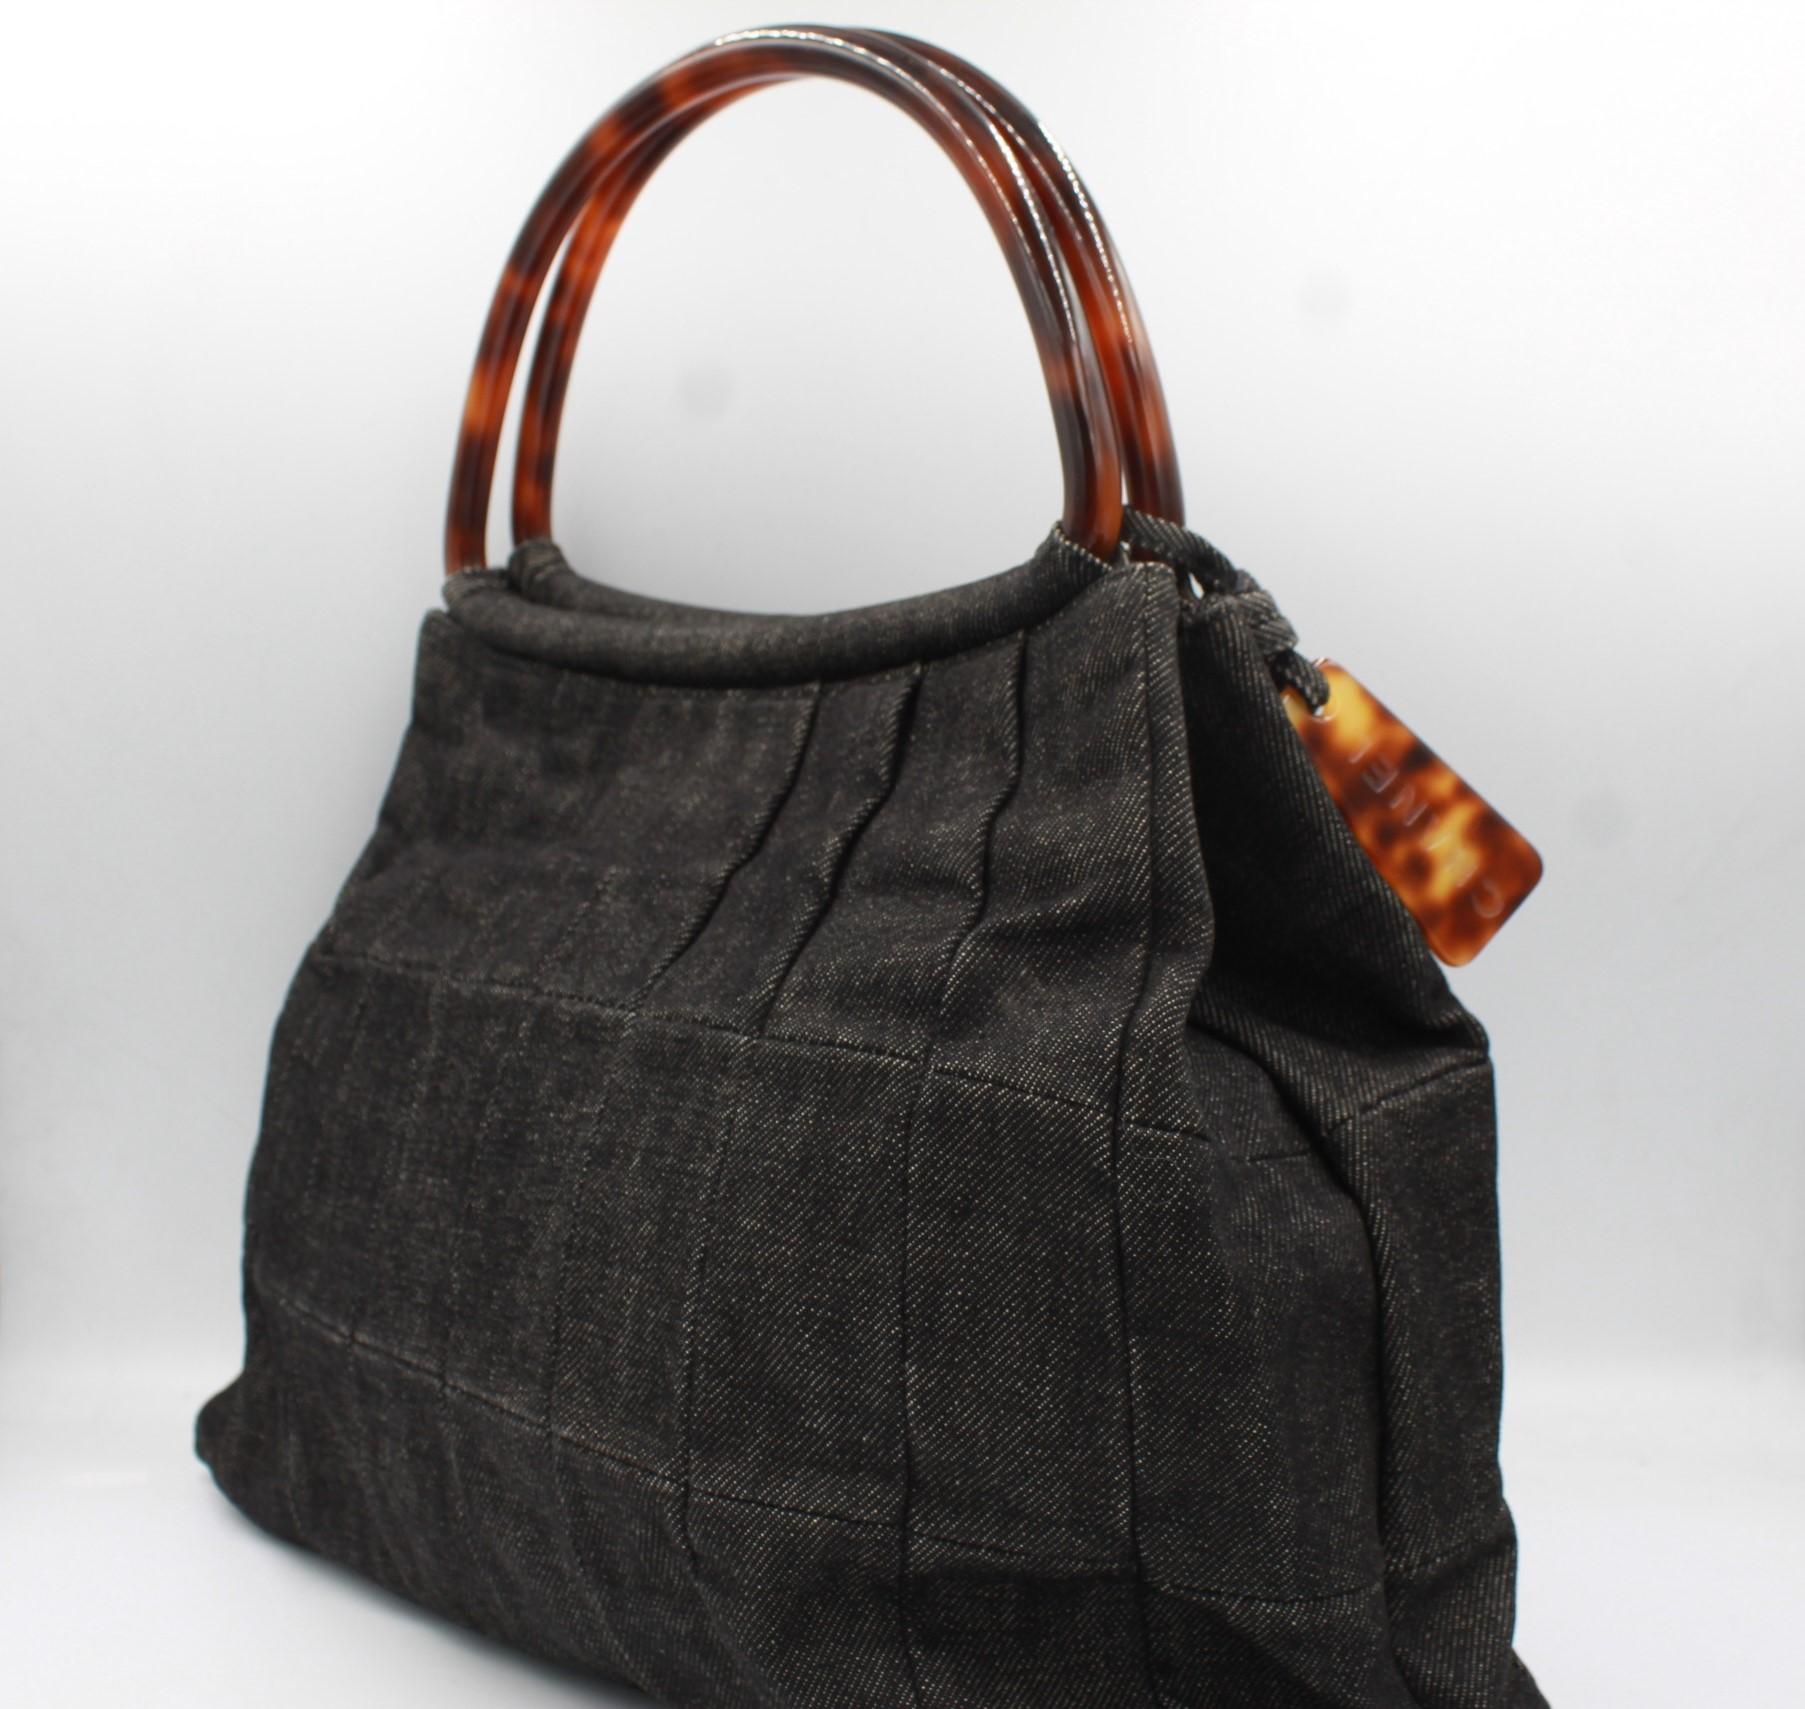 Chanel handbag in grey denim
Good condition.
27cm x 38cm x 9cm